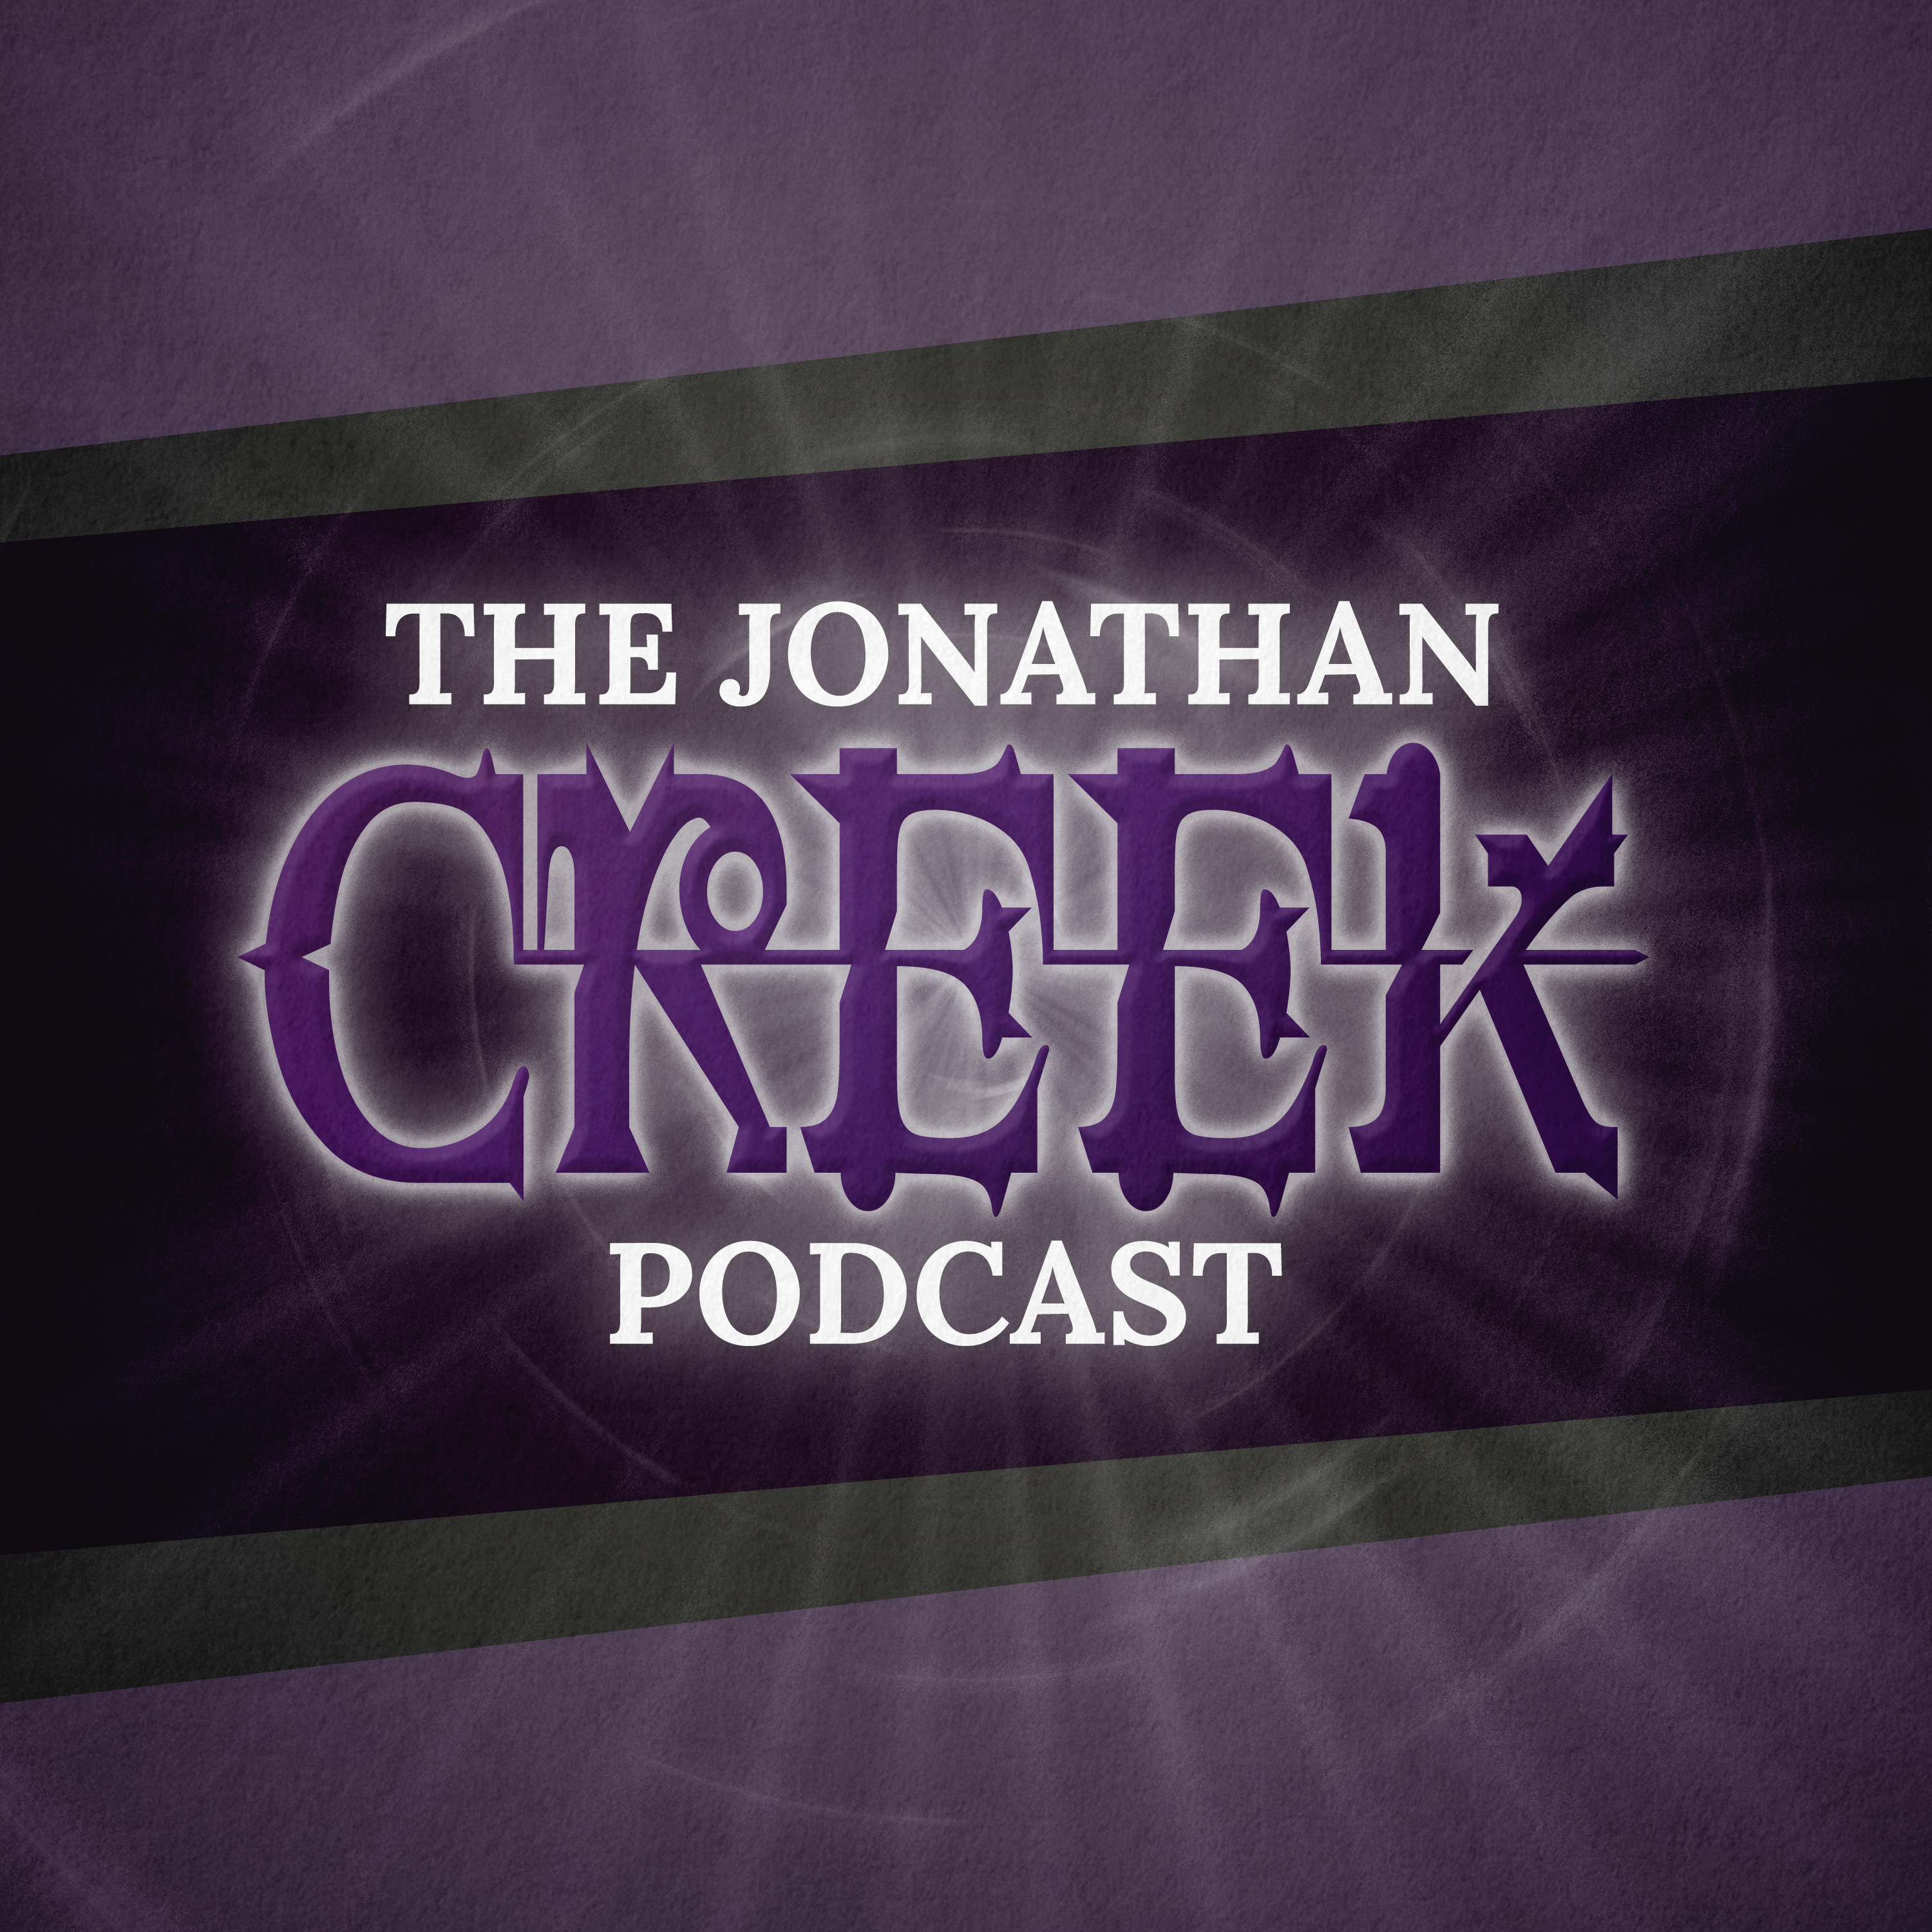 The Jonathan Creek Podcast